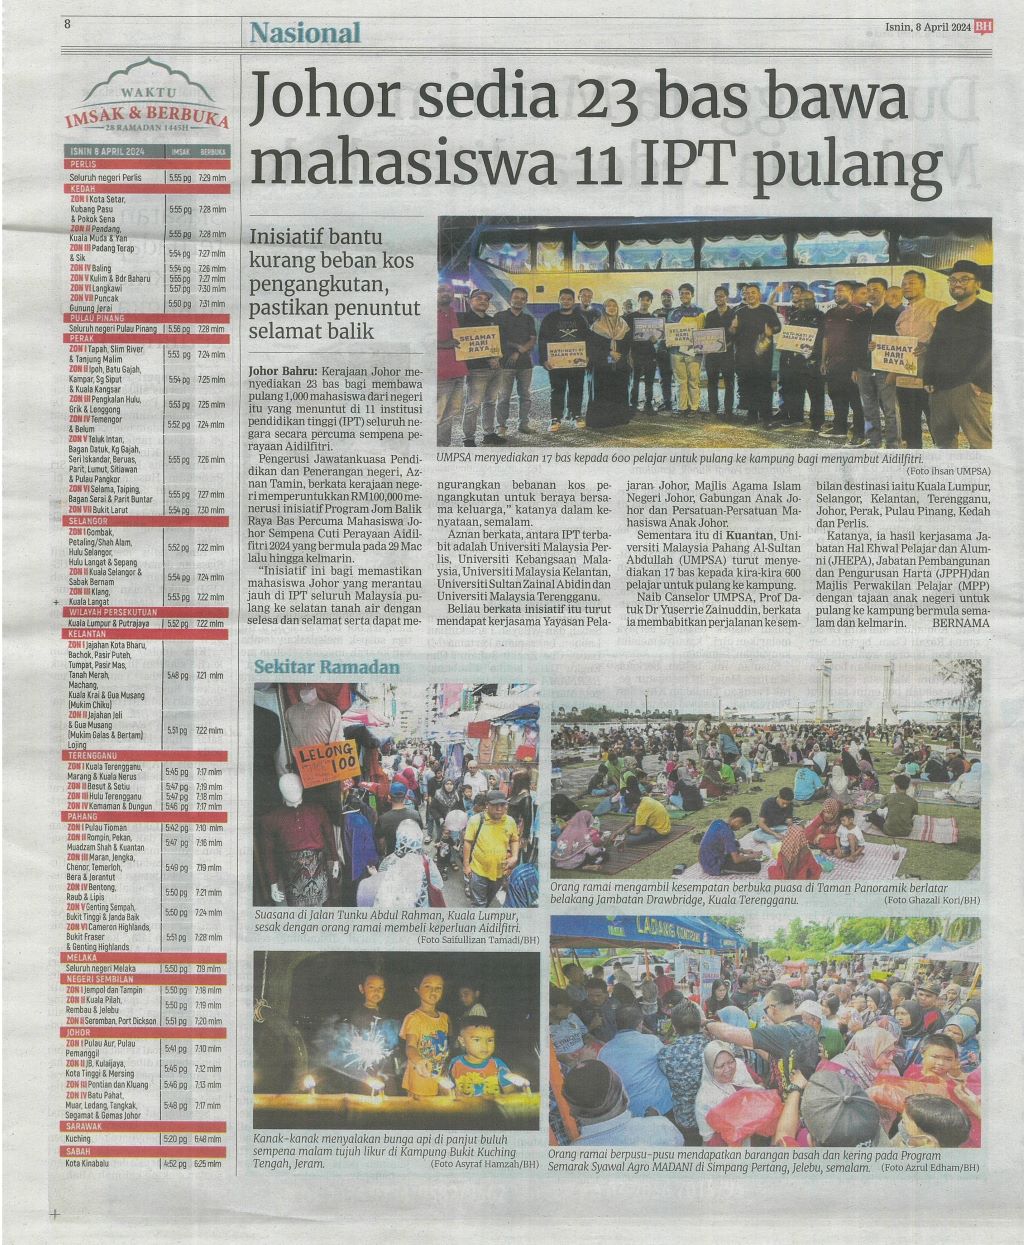 Johor sedia 23 bas bawa mahasiswa 11 IPT pulang 